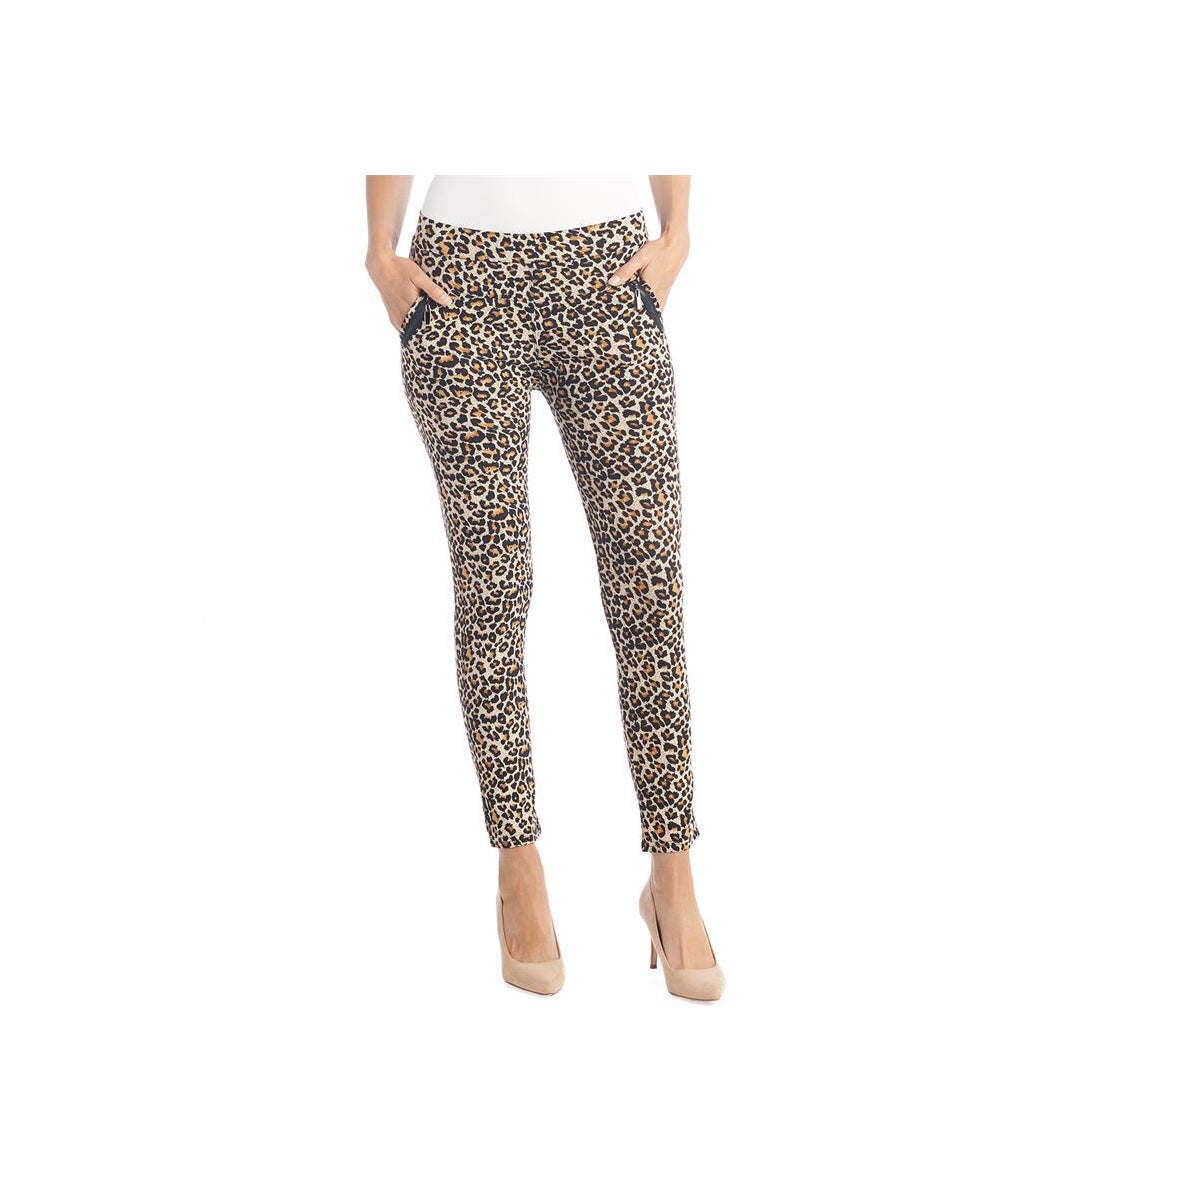 jasmine zip pocket leggings - leopard l/xl